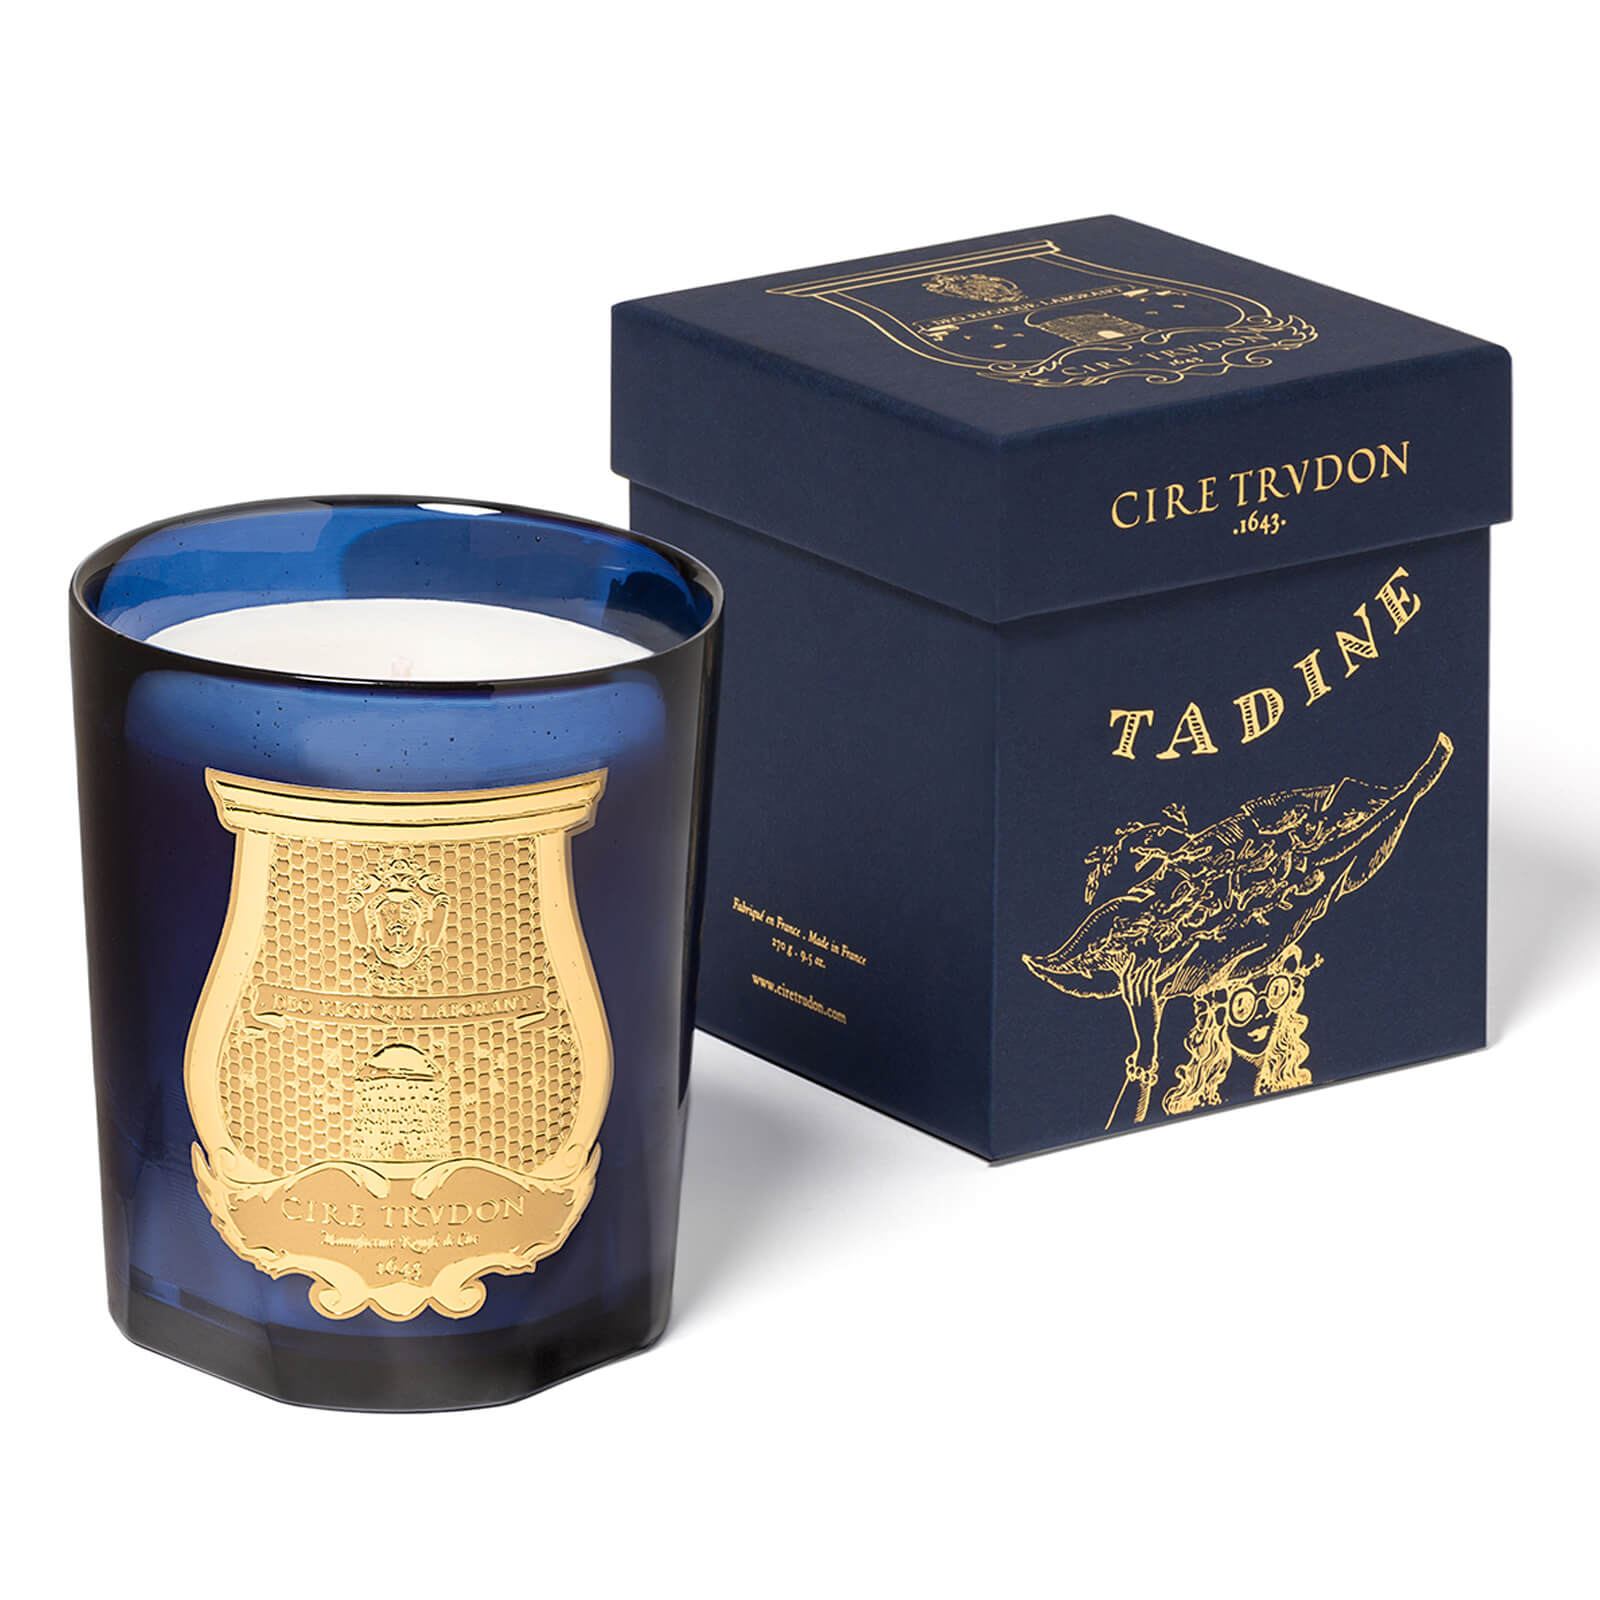 Cire Trudon Les Belles Matières Tadine Limited Collection Candle - Sandalwood